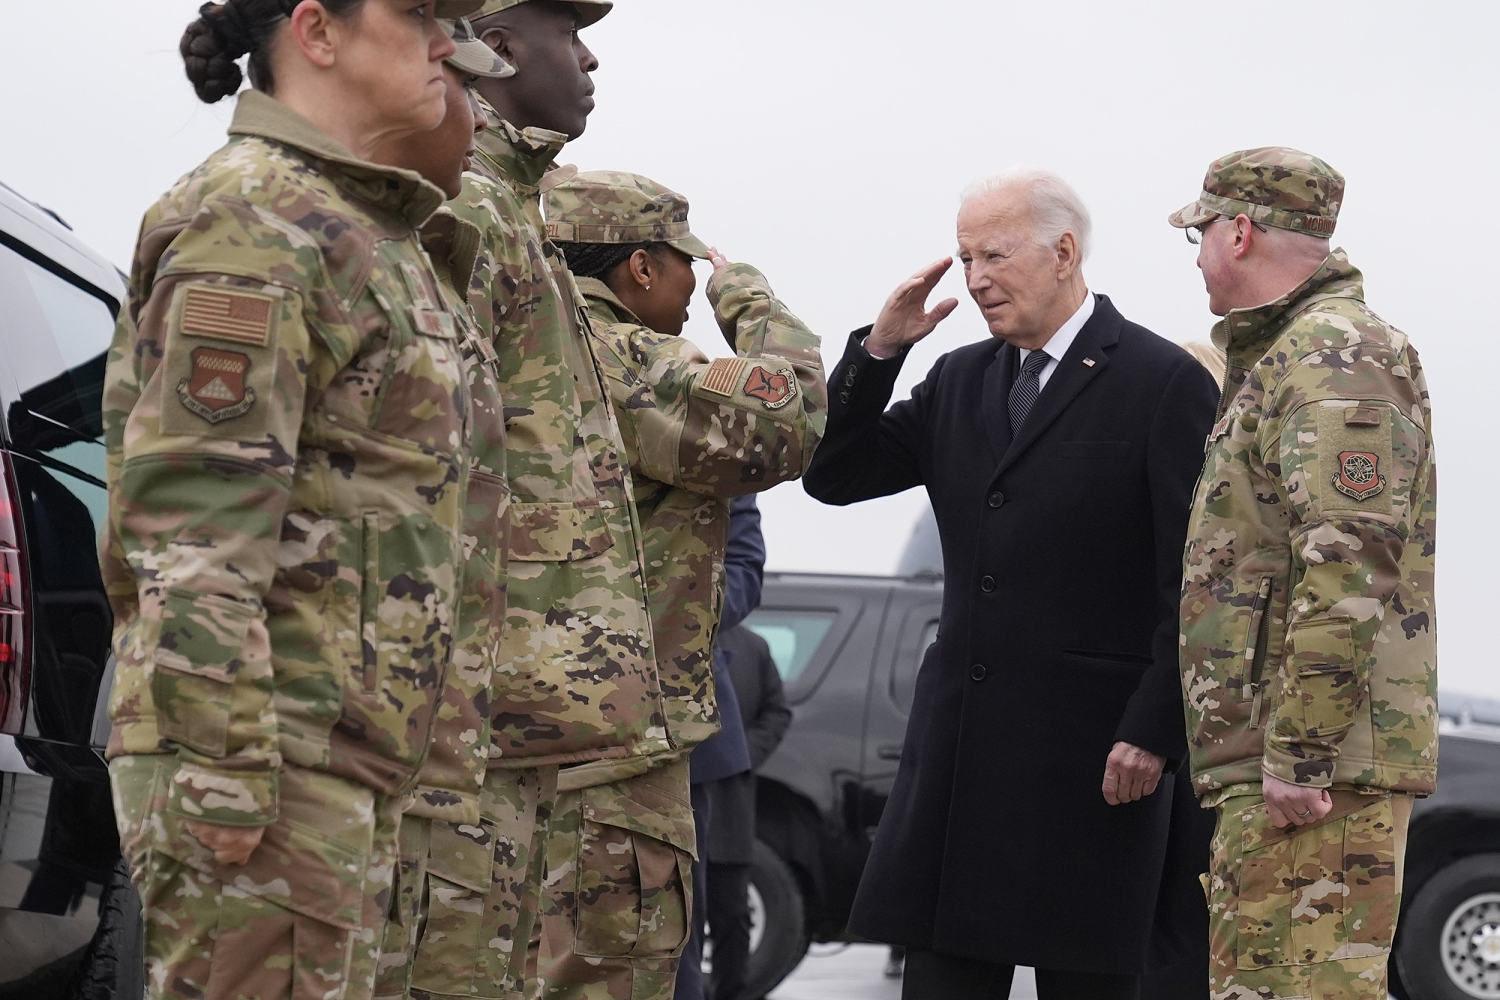 Biden attends dignified transfer for U.S. service members killed in Jordan